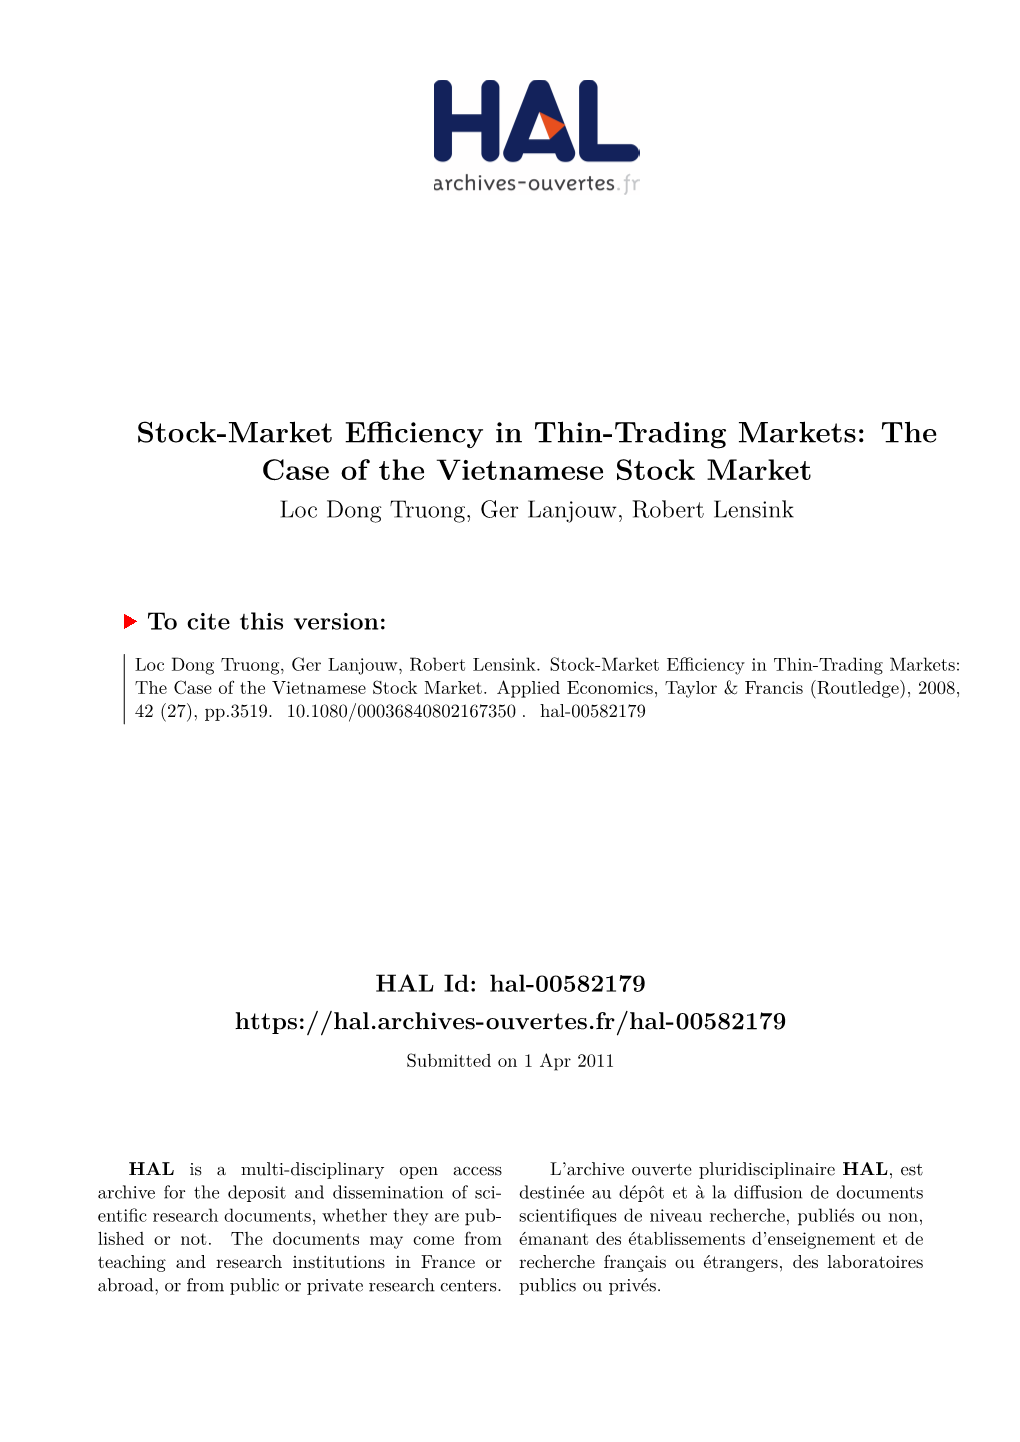 The Case of the Vietnamese Stock Market Loc Dong Truong, Ger Lanjouw, Robert Lensink